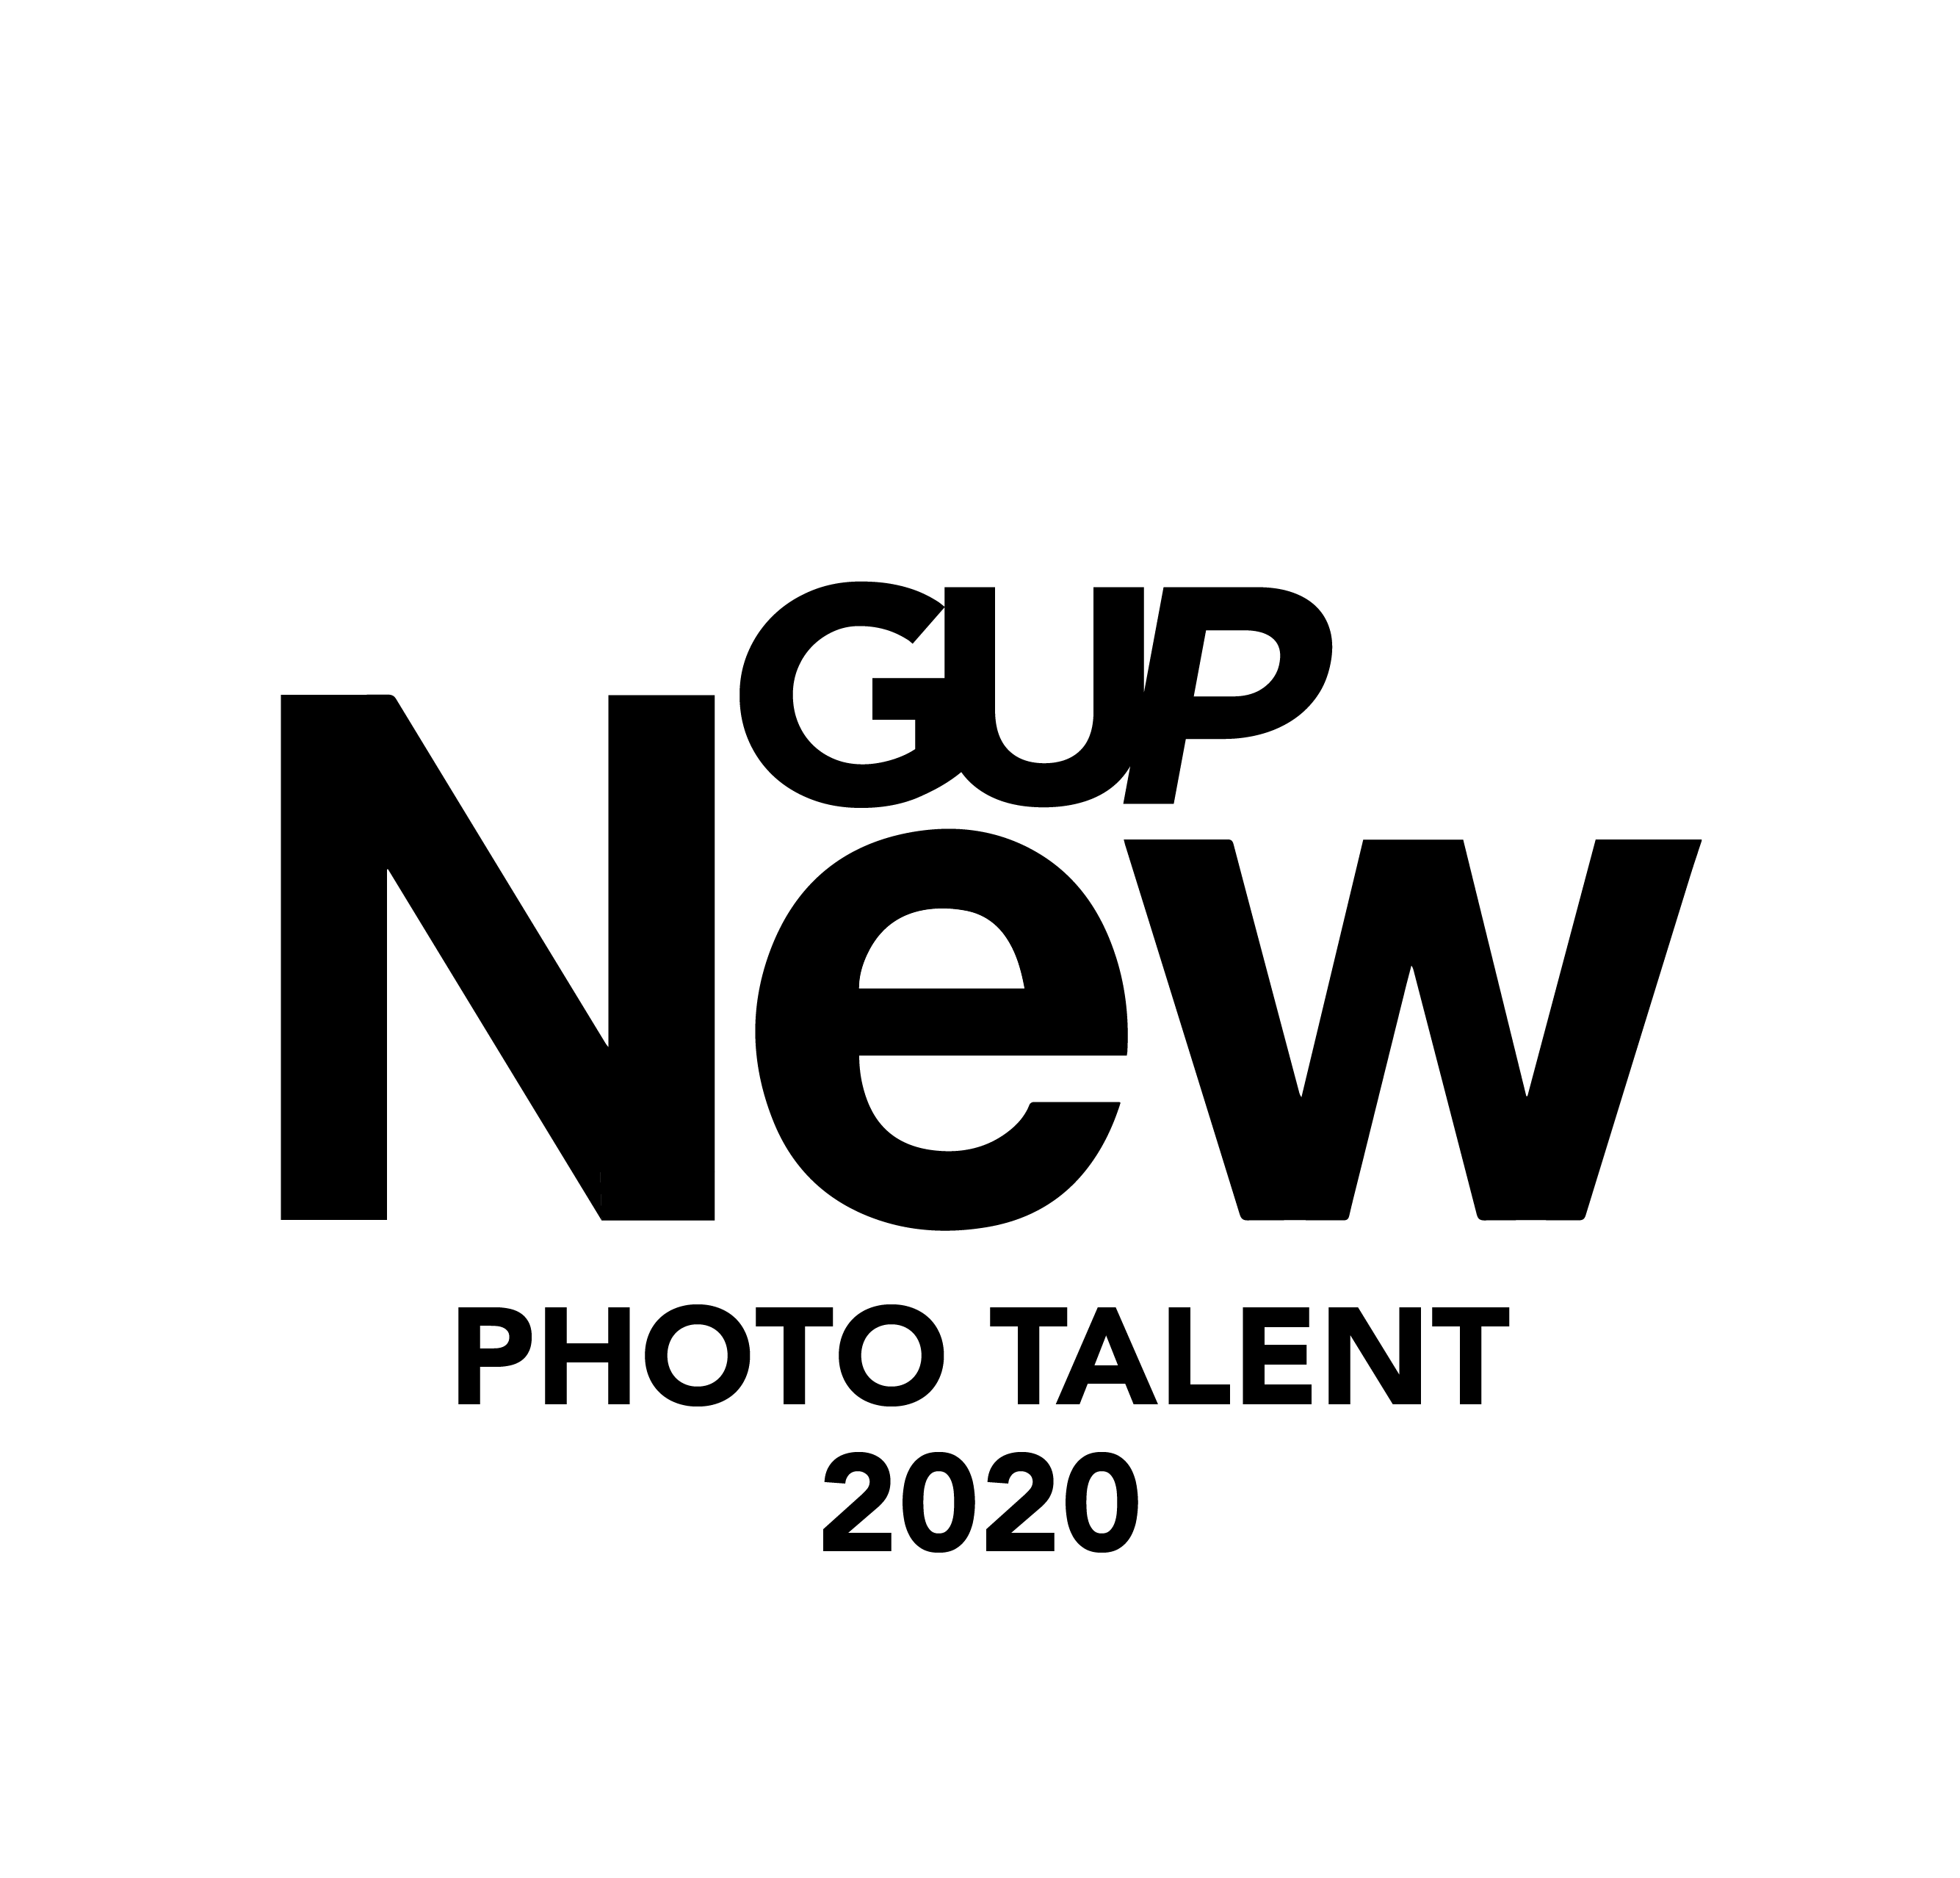 Gup_New_Sticker_White